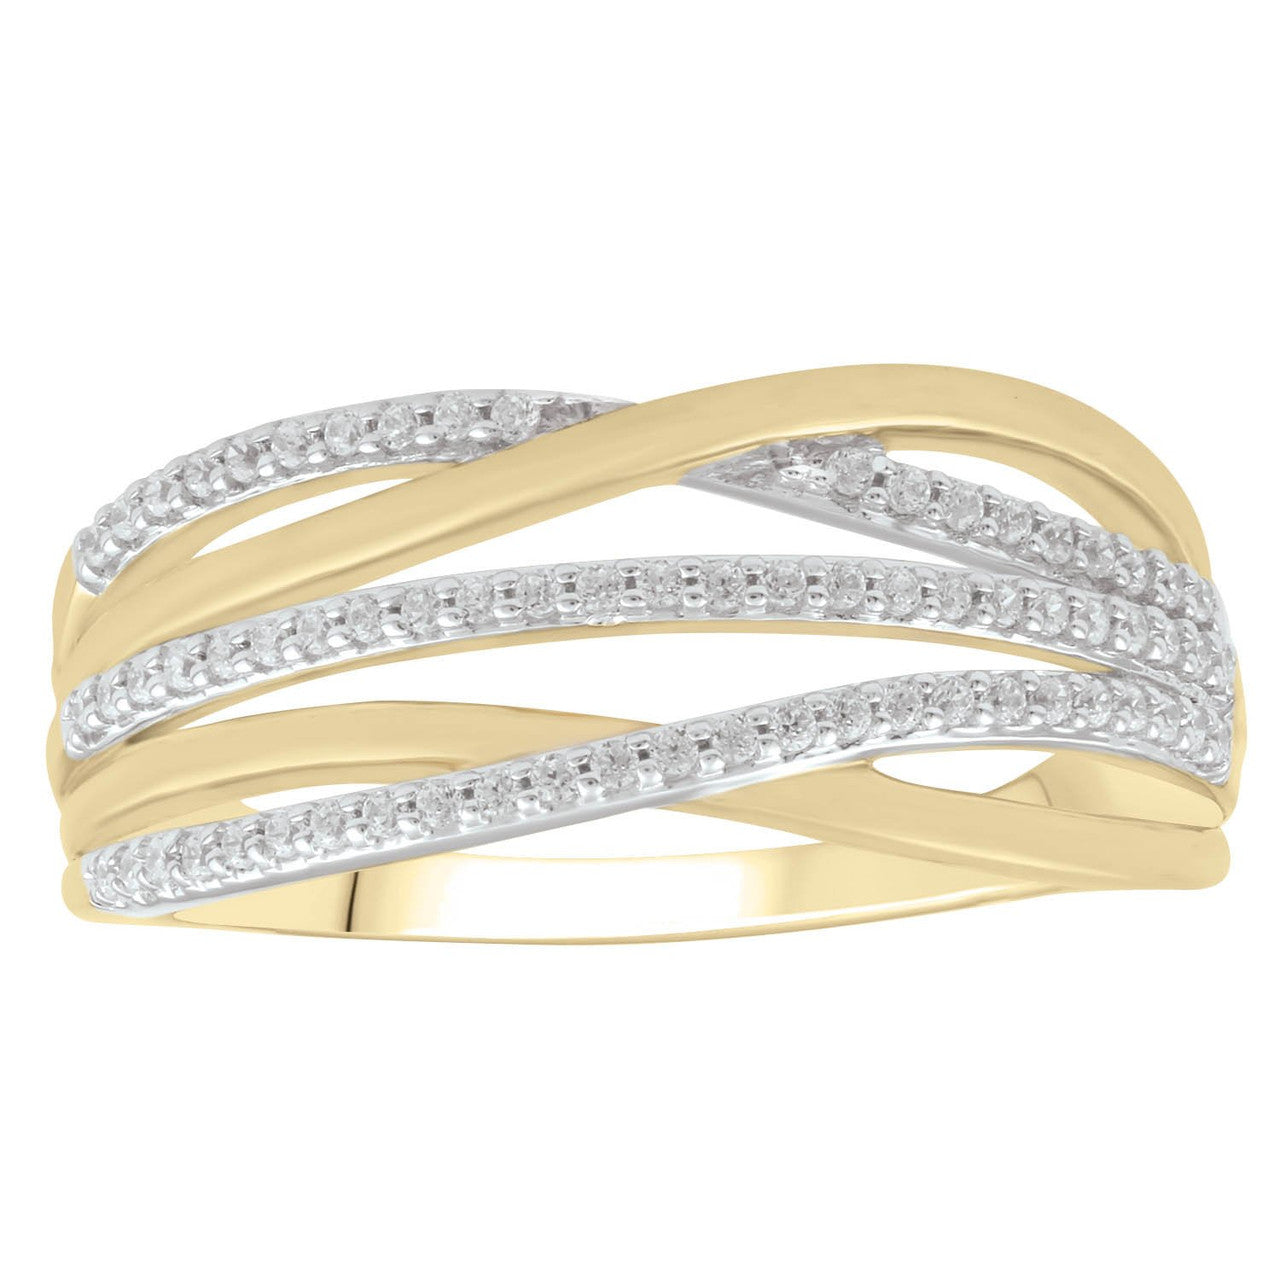 Ice Jewellery Ring with 0.20ct Diamonds in 9K Yellow Gold -  R-41461-020-Y | Ice Jewellery Australia